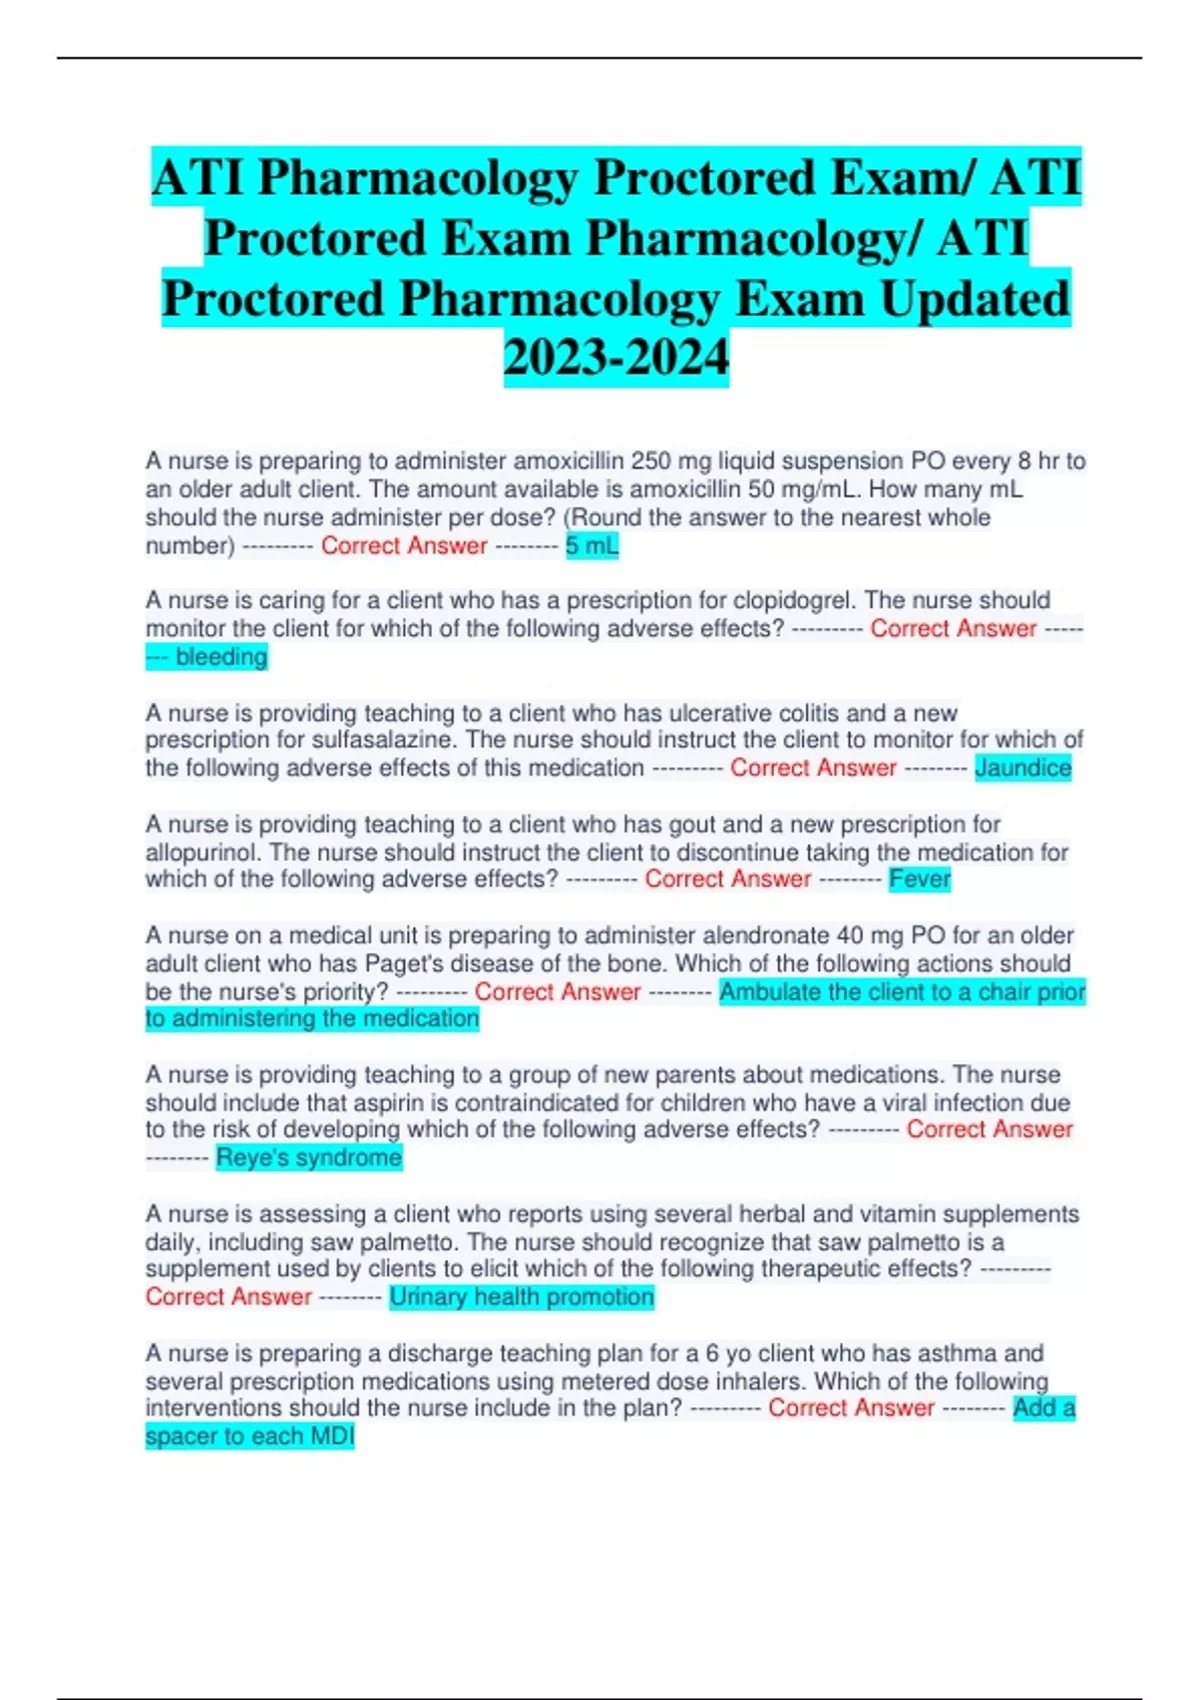 ATI Pharmacology Proctored Exam/ ATI Proctored Exam Pharmacology/ ATI